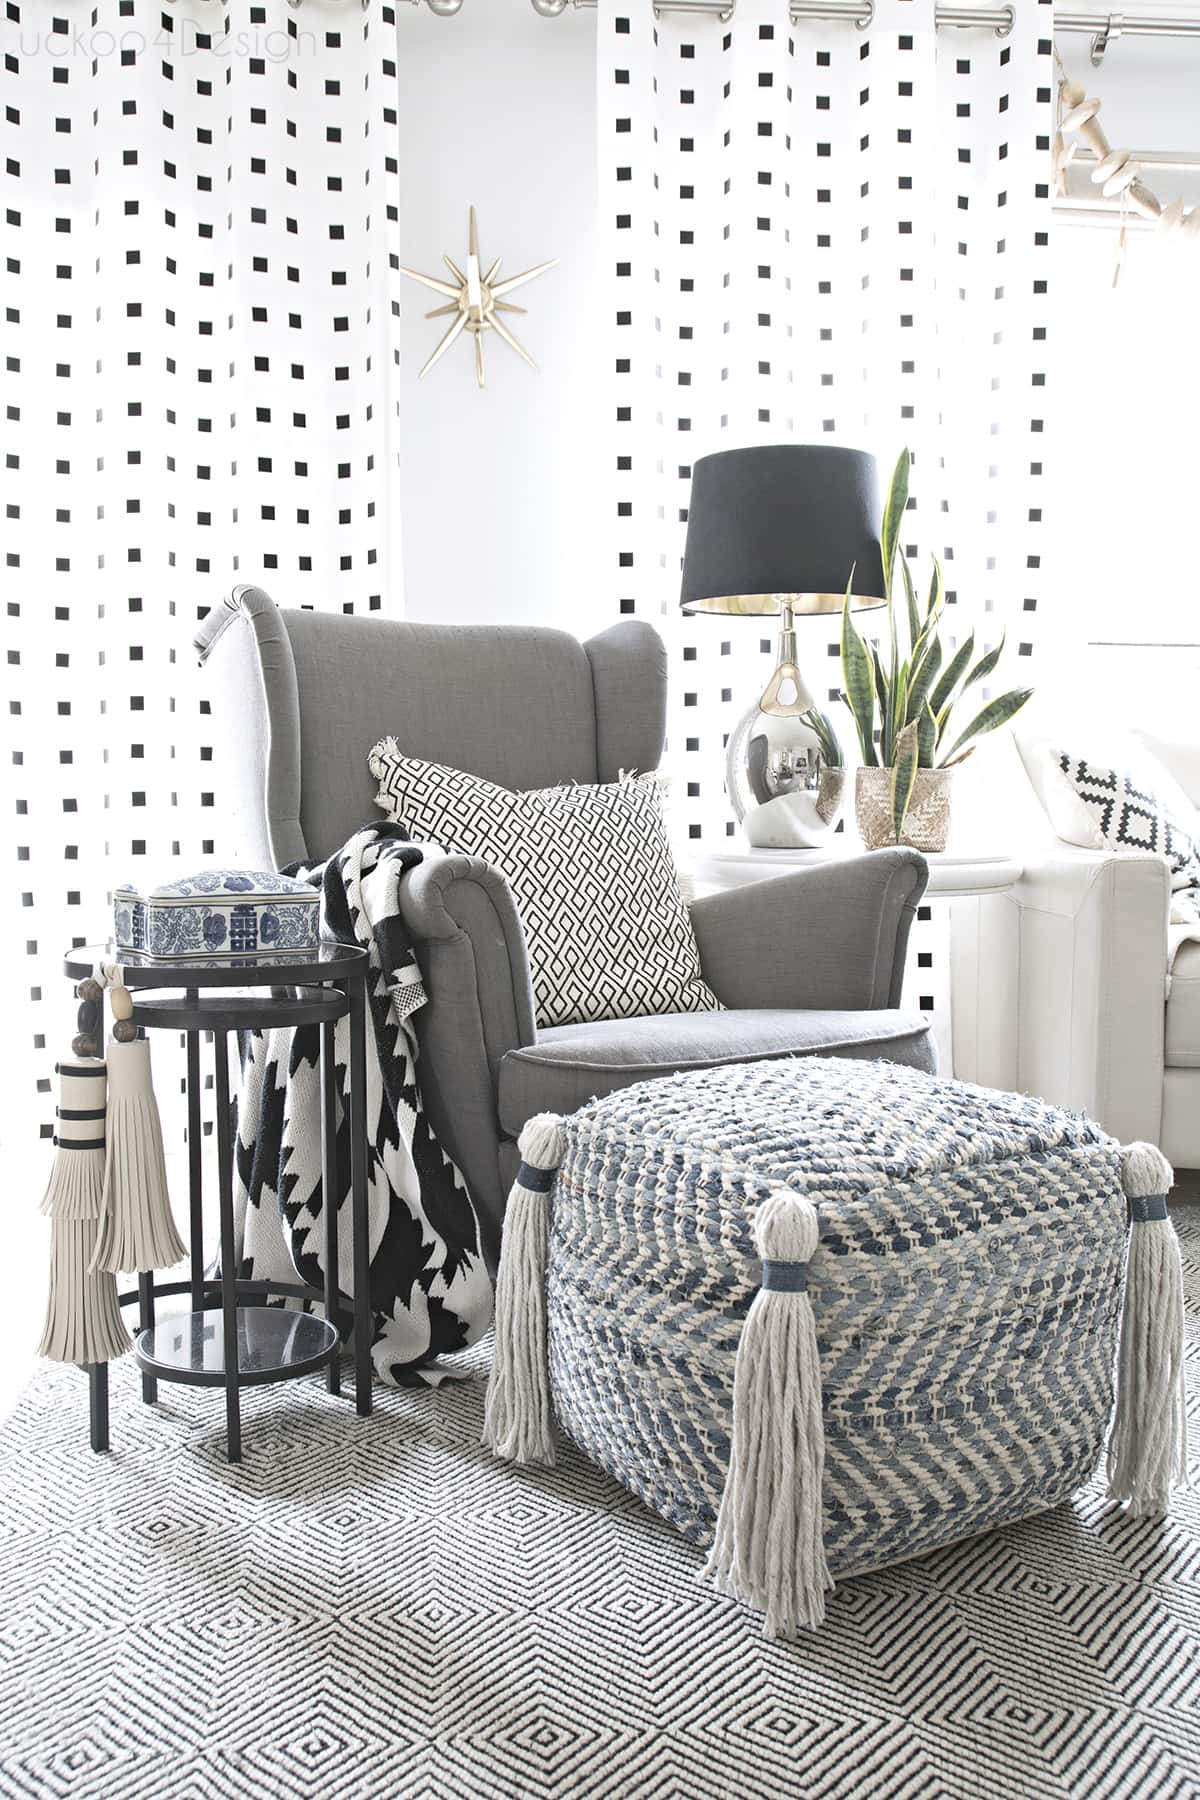 gray Ikea chair with tassel ottoman